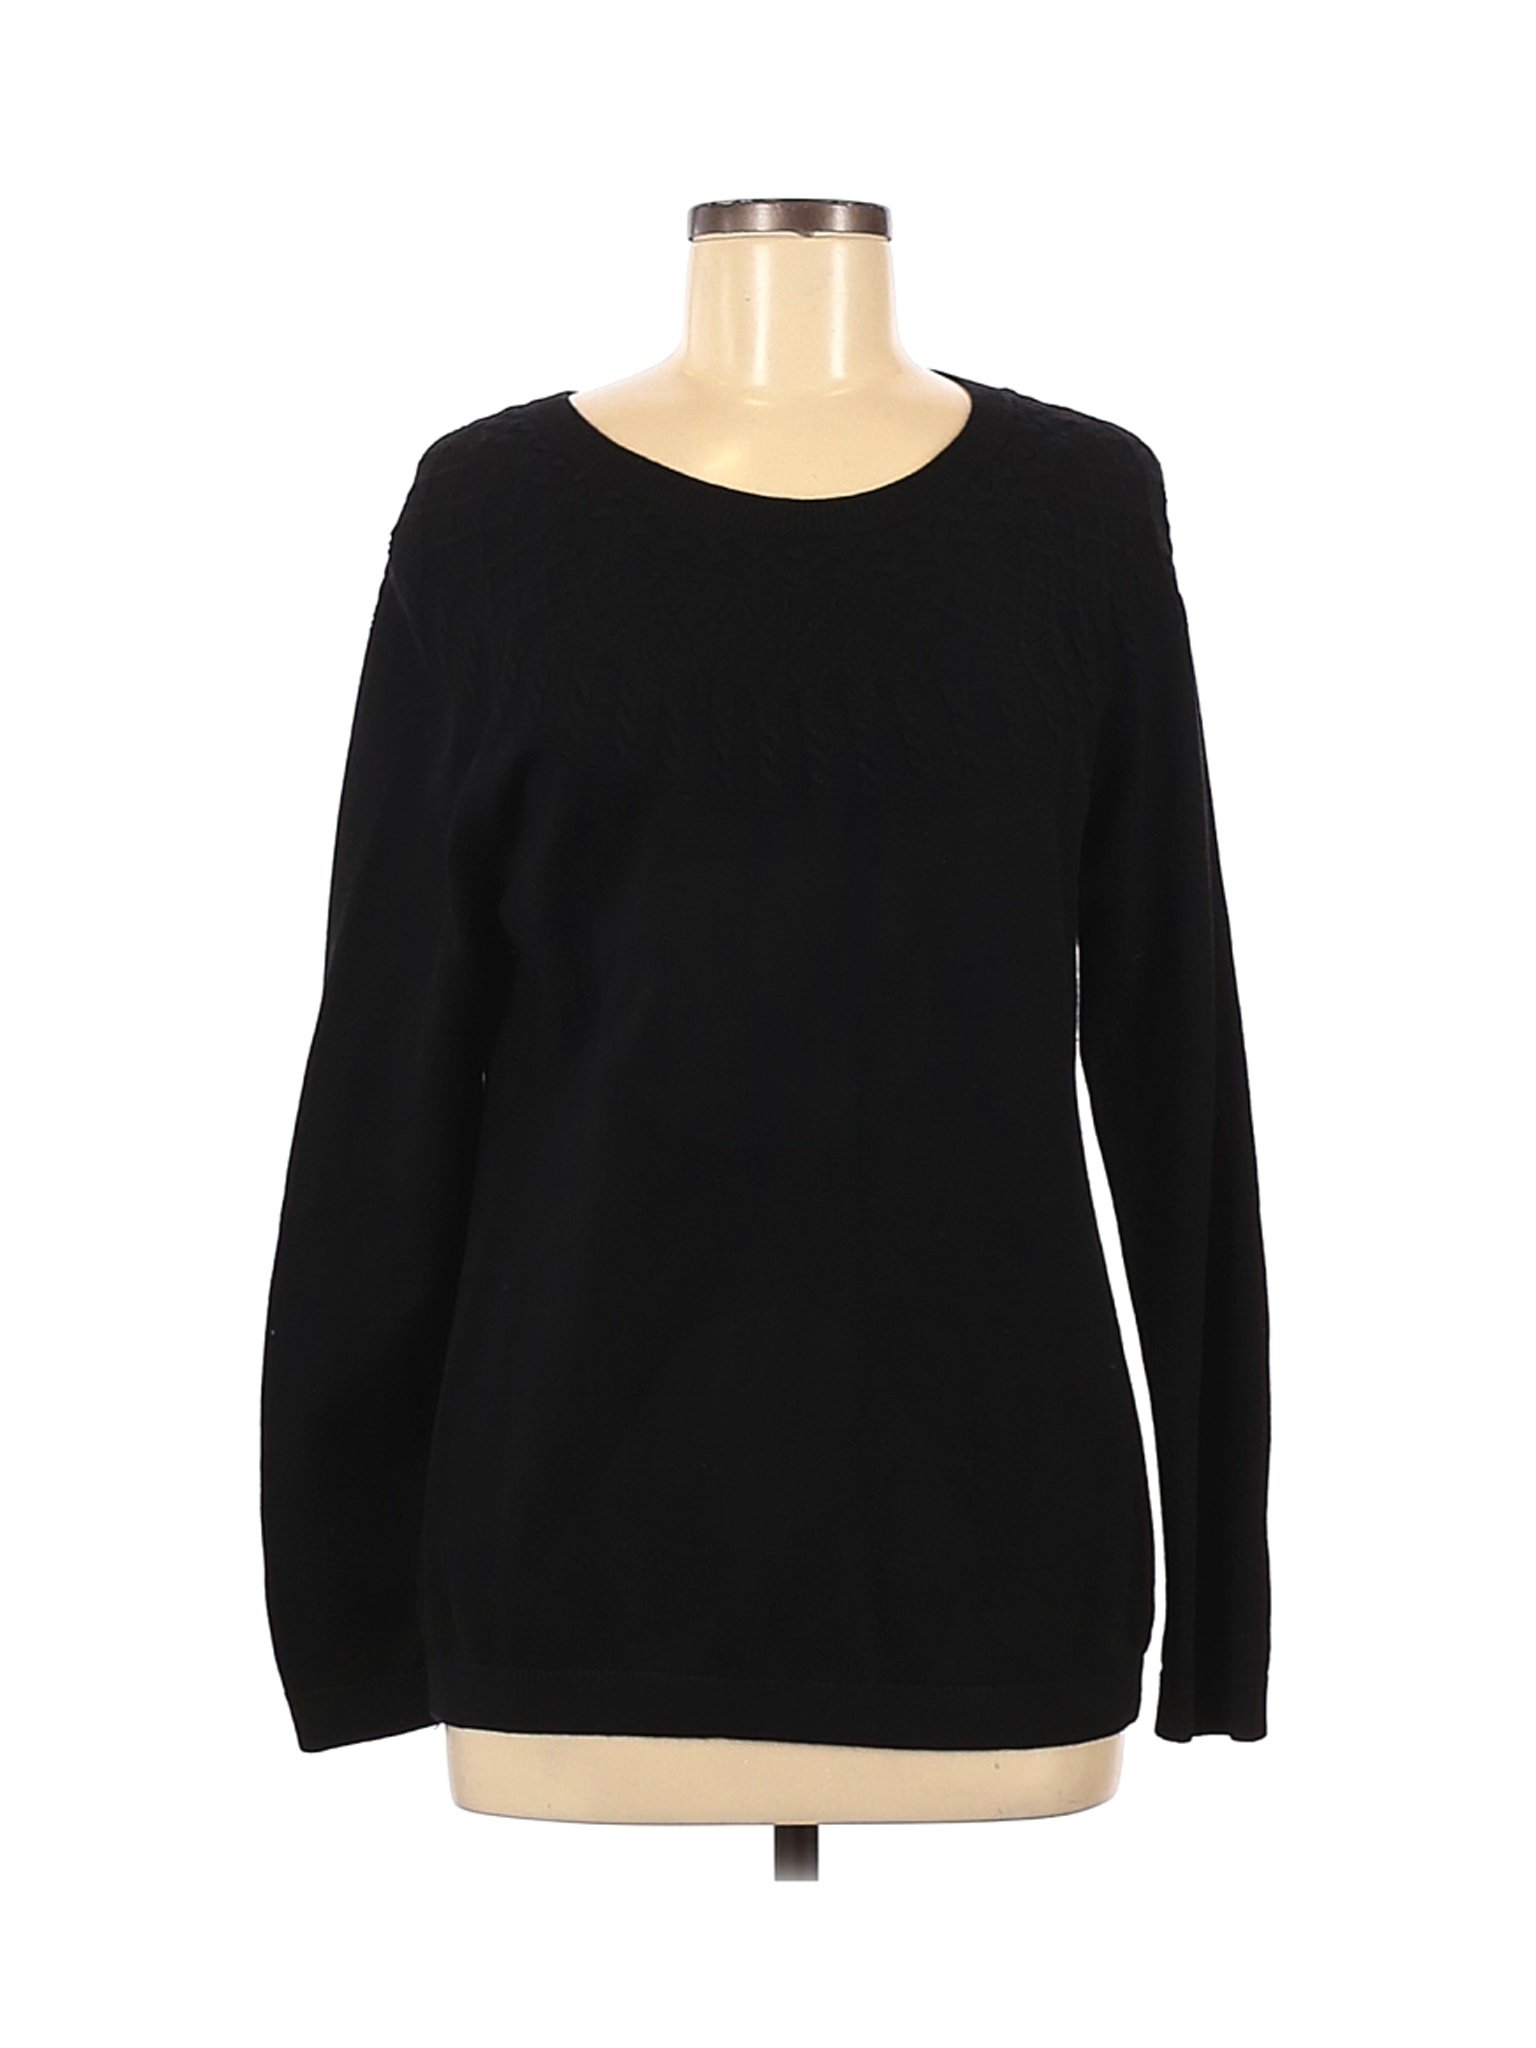 Talbots Women Black Pullover Sweater L | eBay